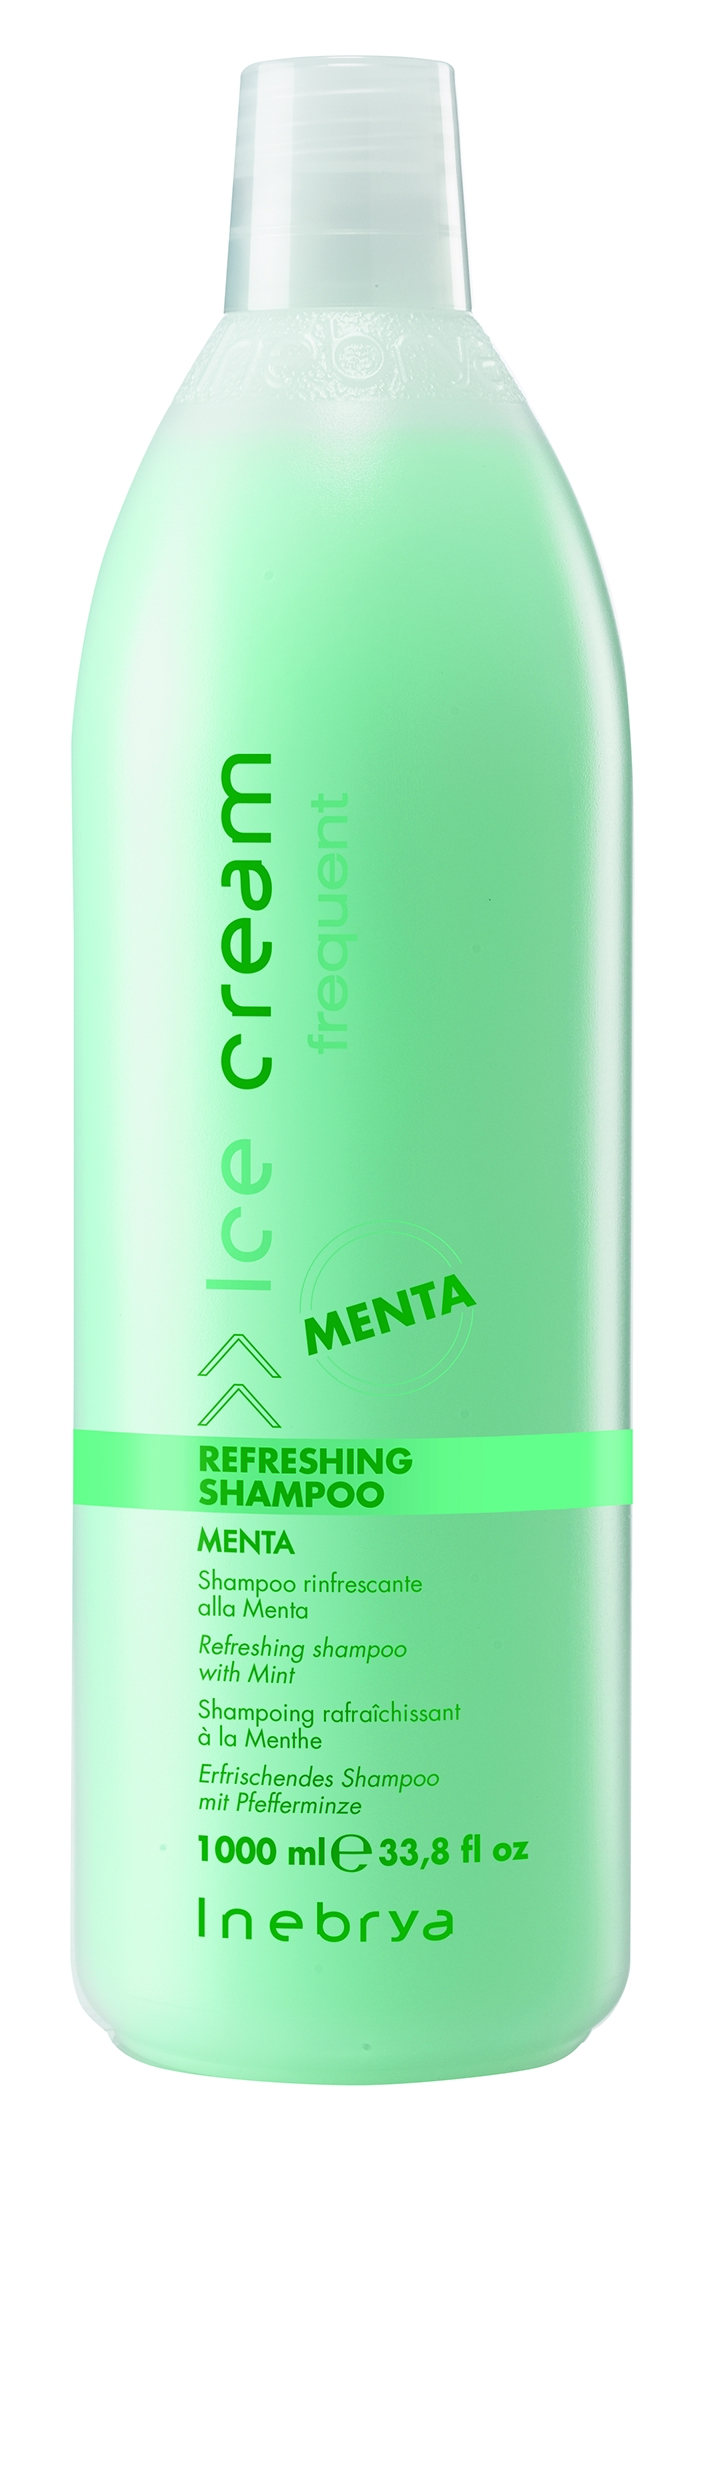 Inebrya Refreshing Shampoo